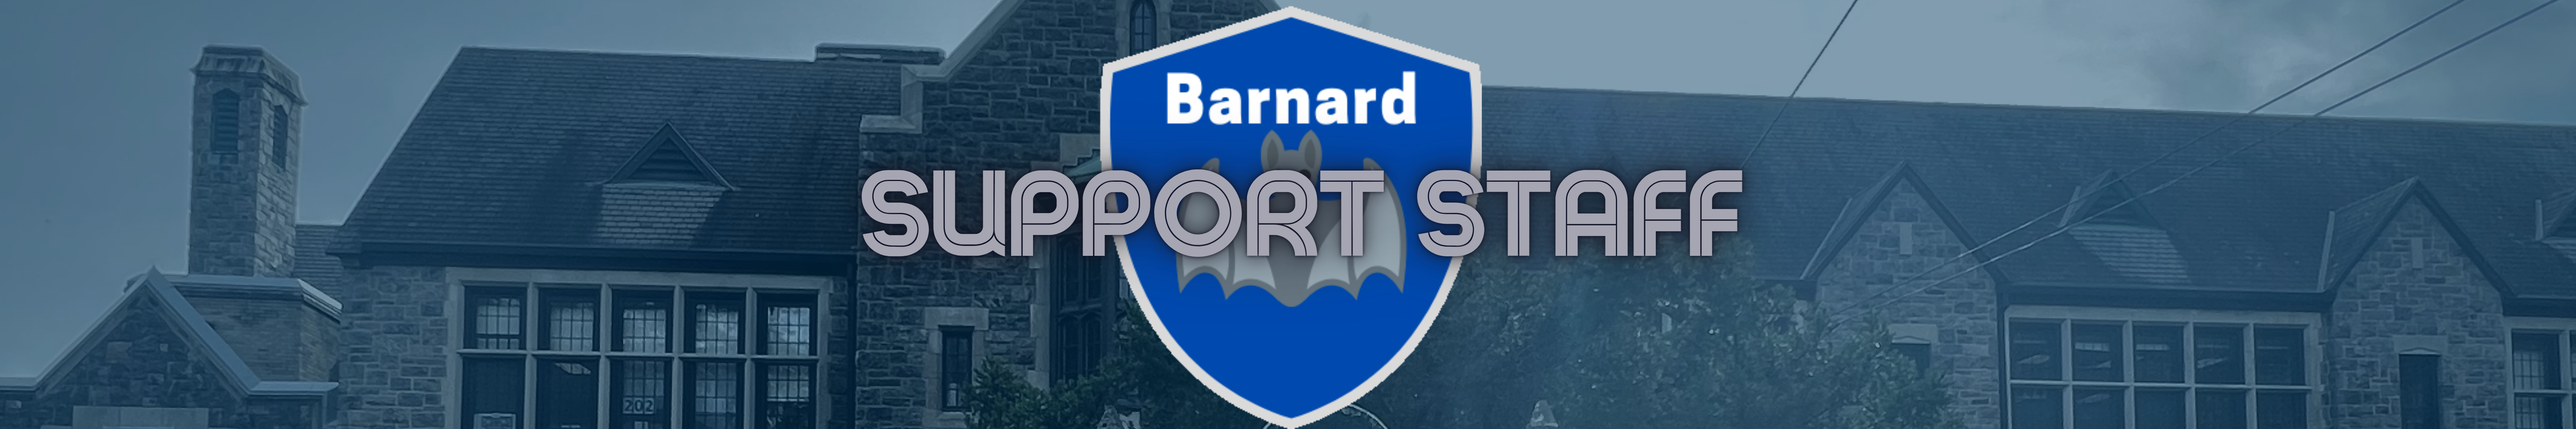 Barnard Support Staff banner